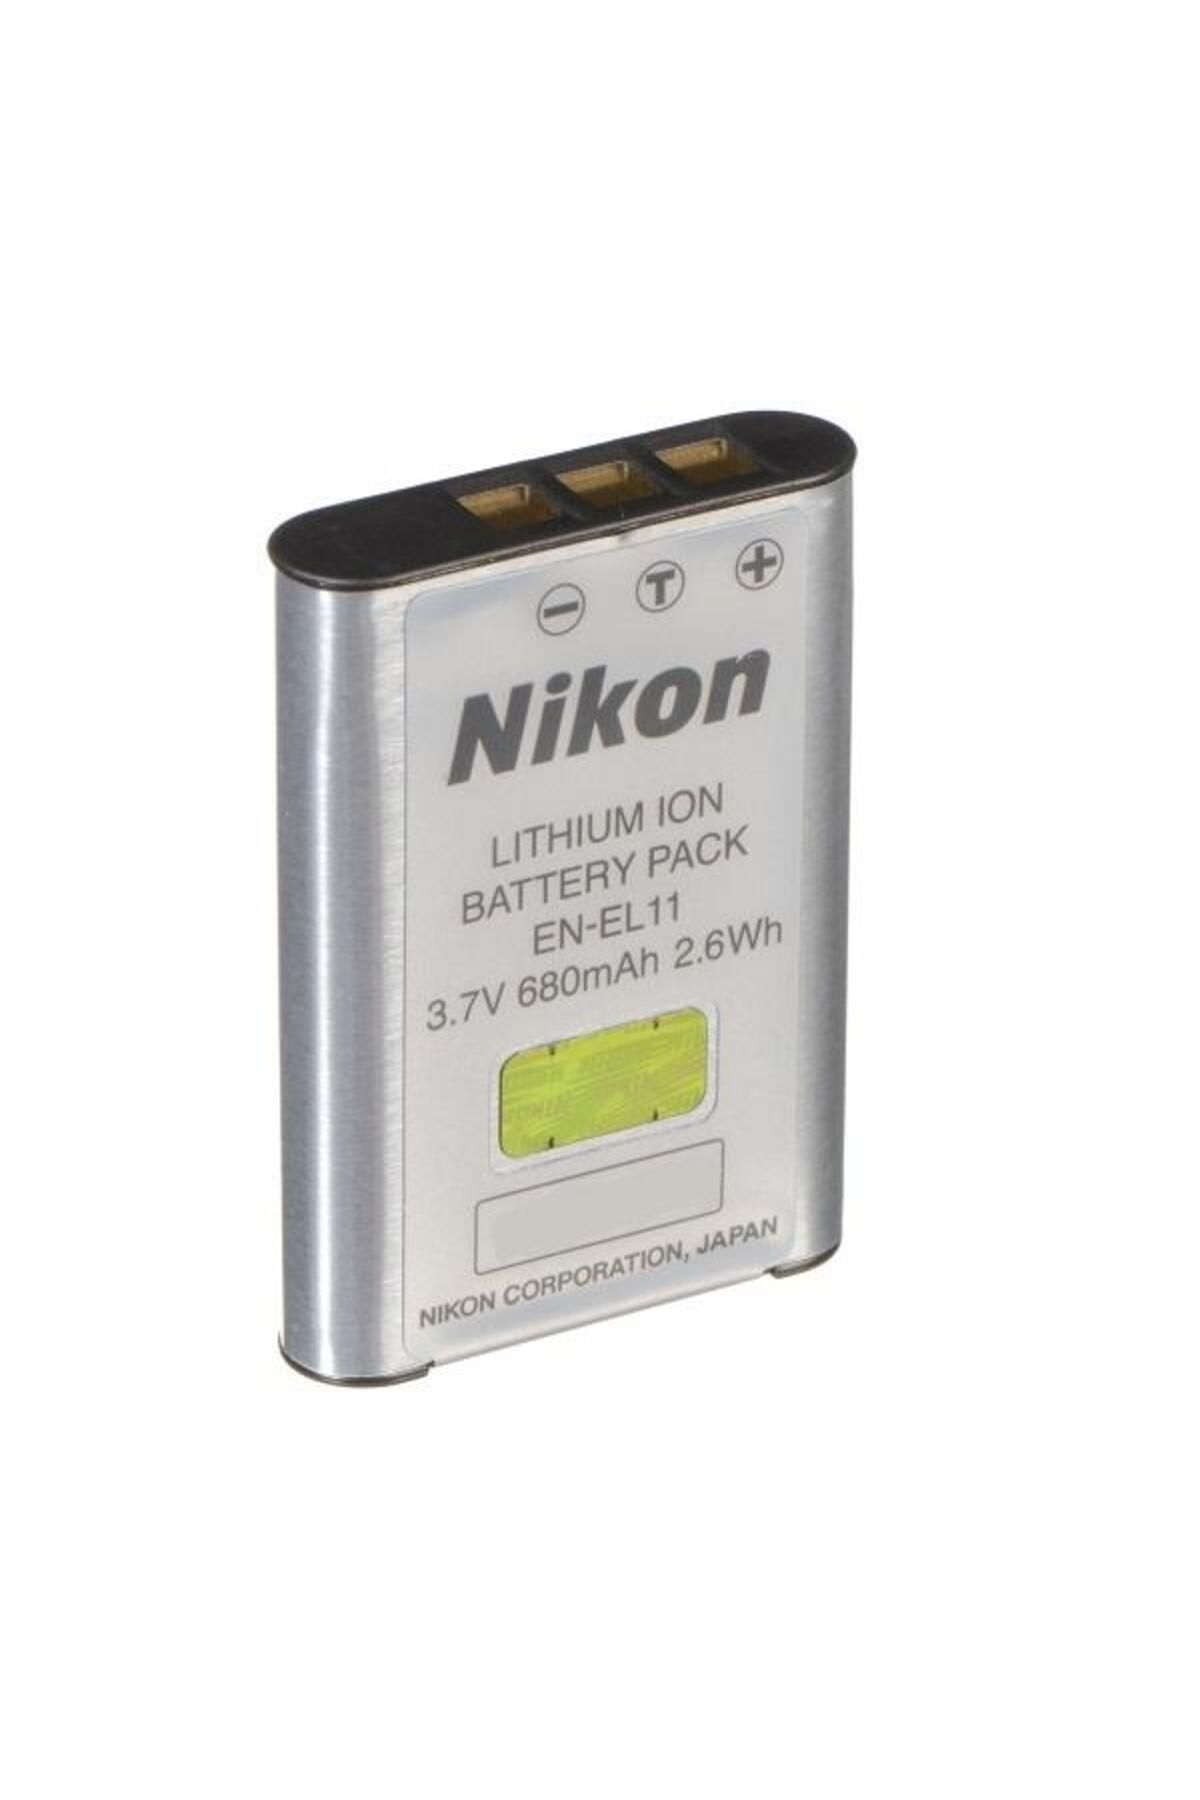 Nikon Nikon En-el11 Batarya